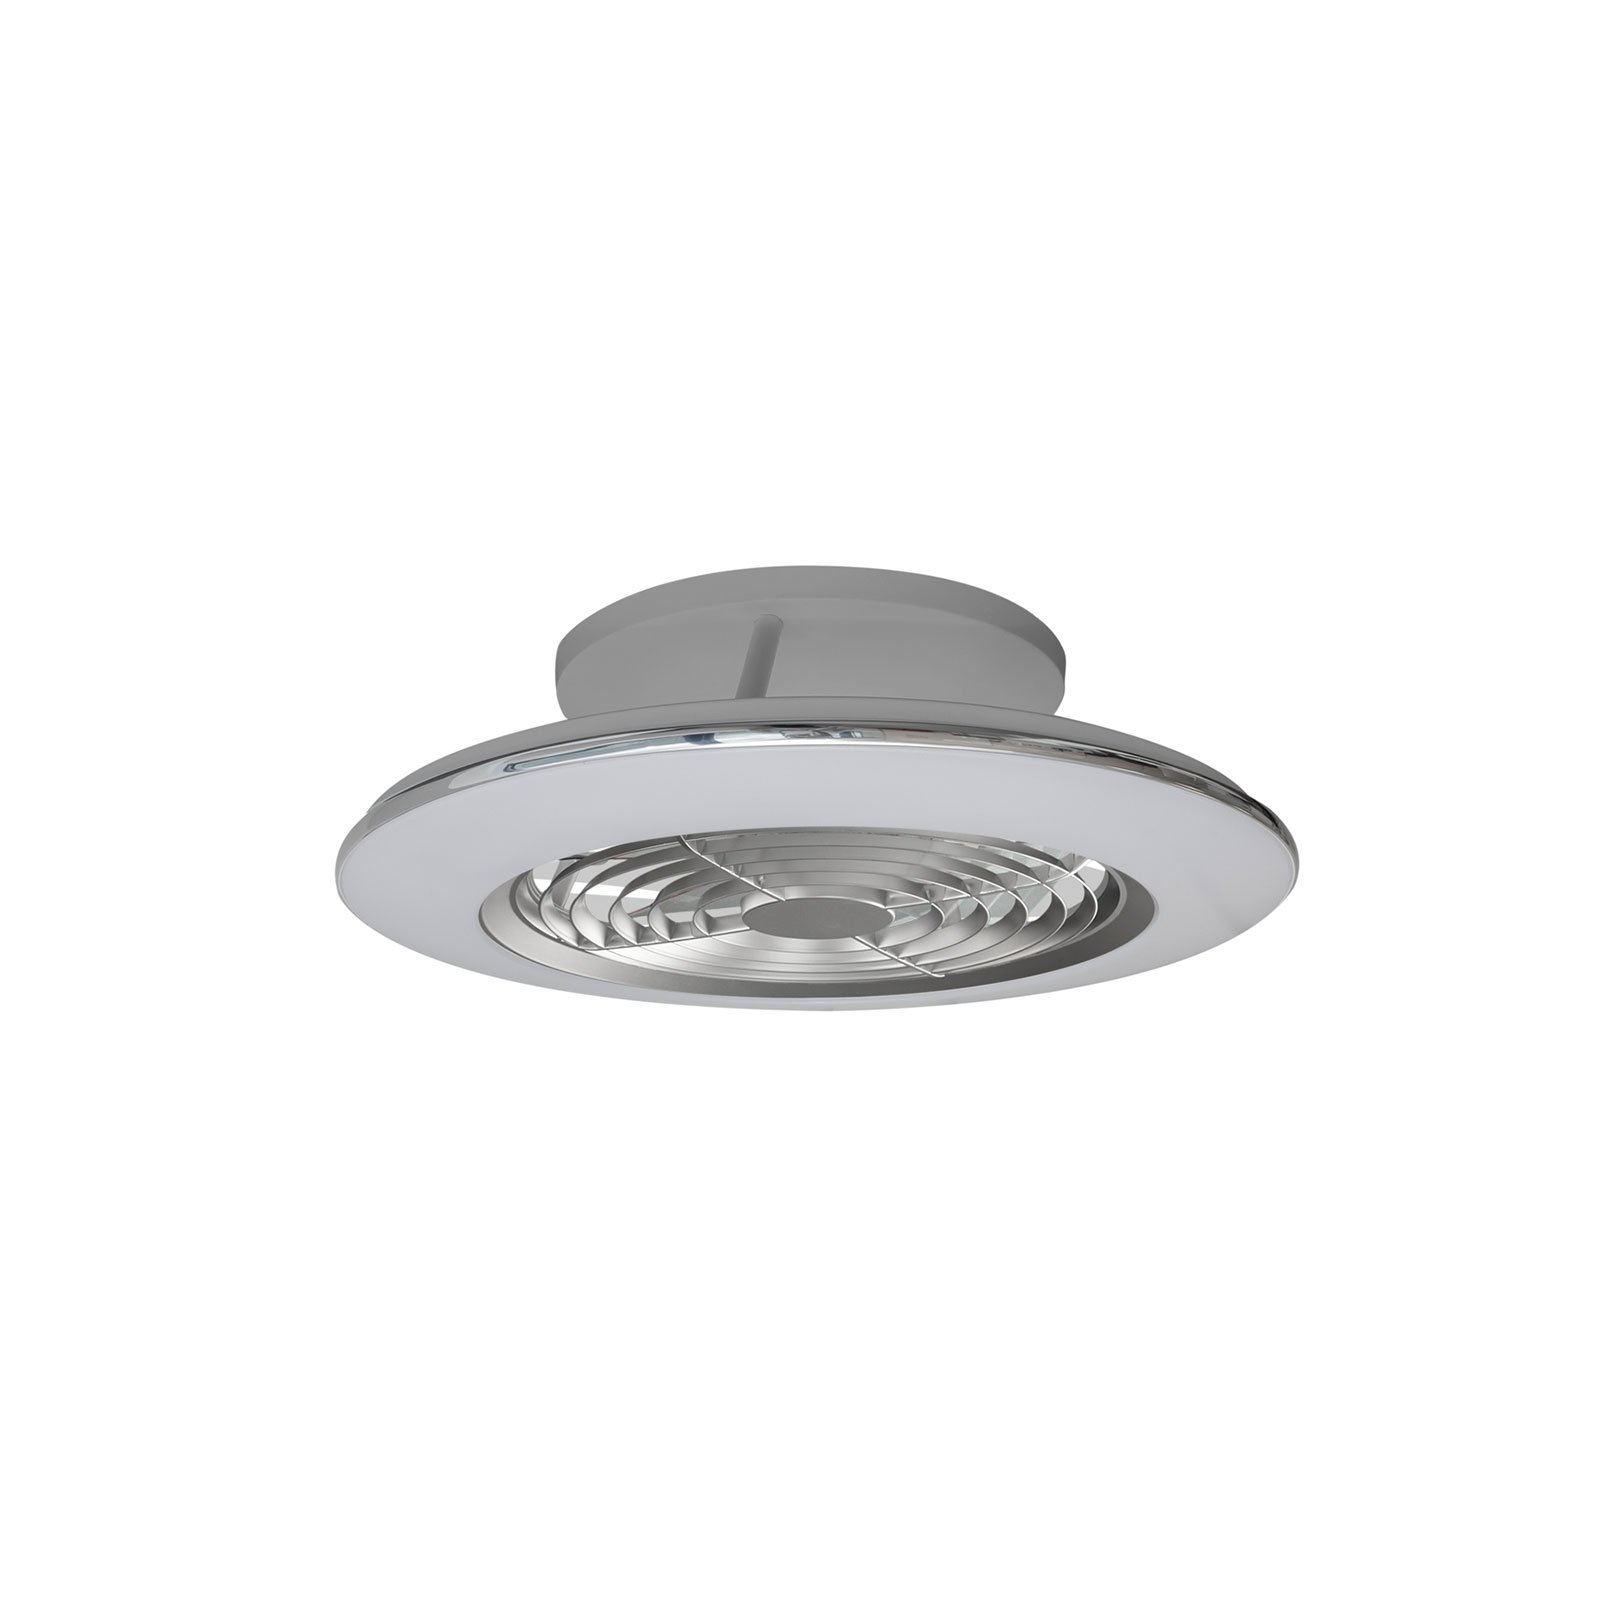 Alisio mini LED ceiling fan, silver